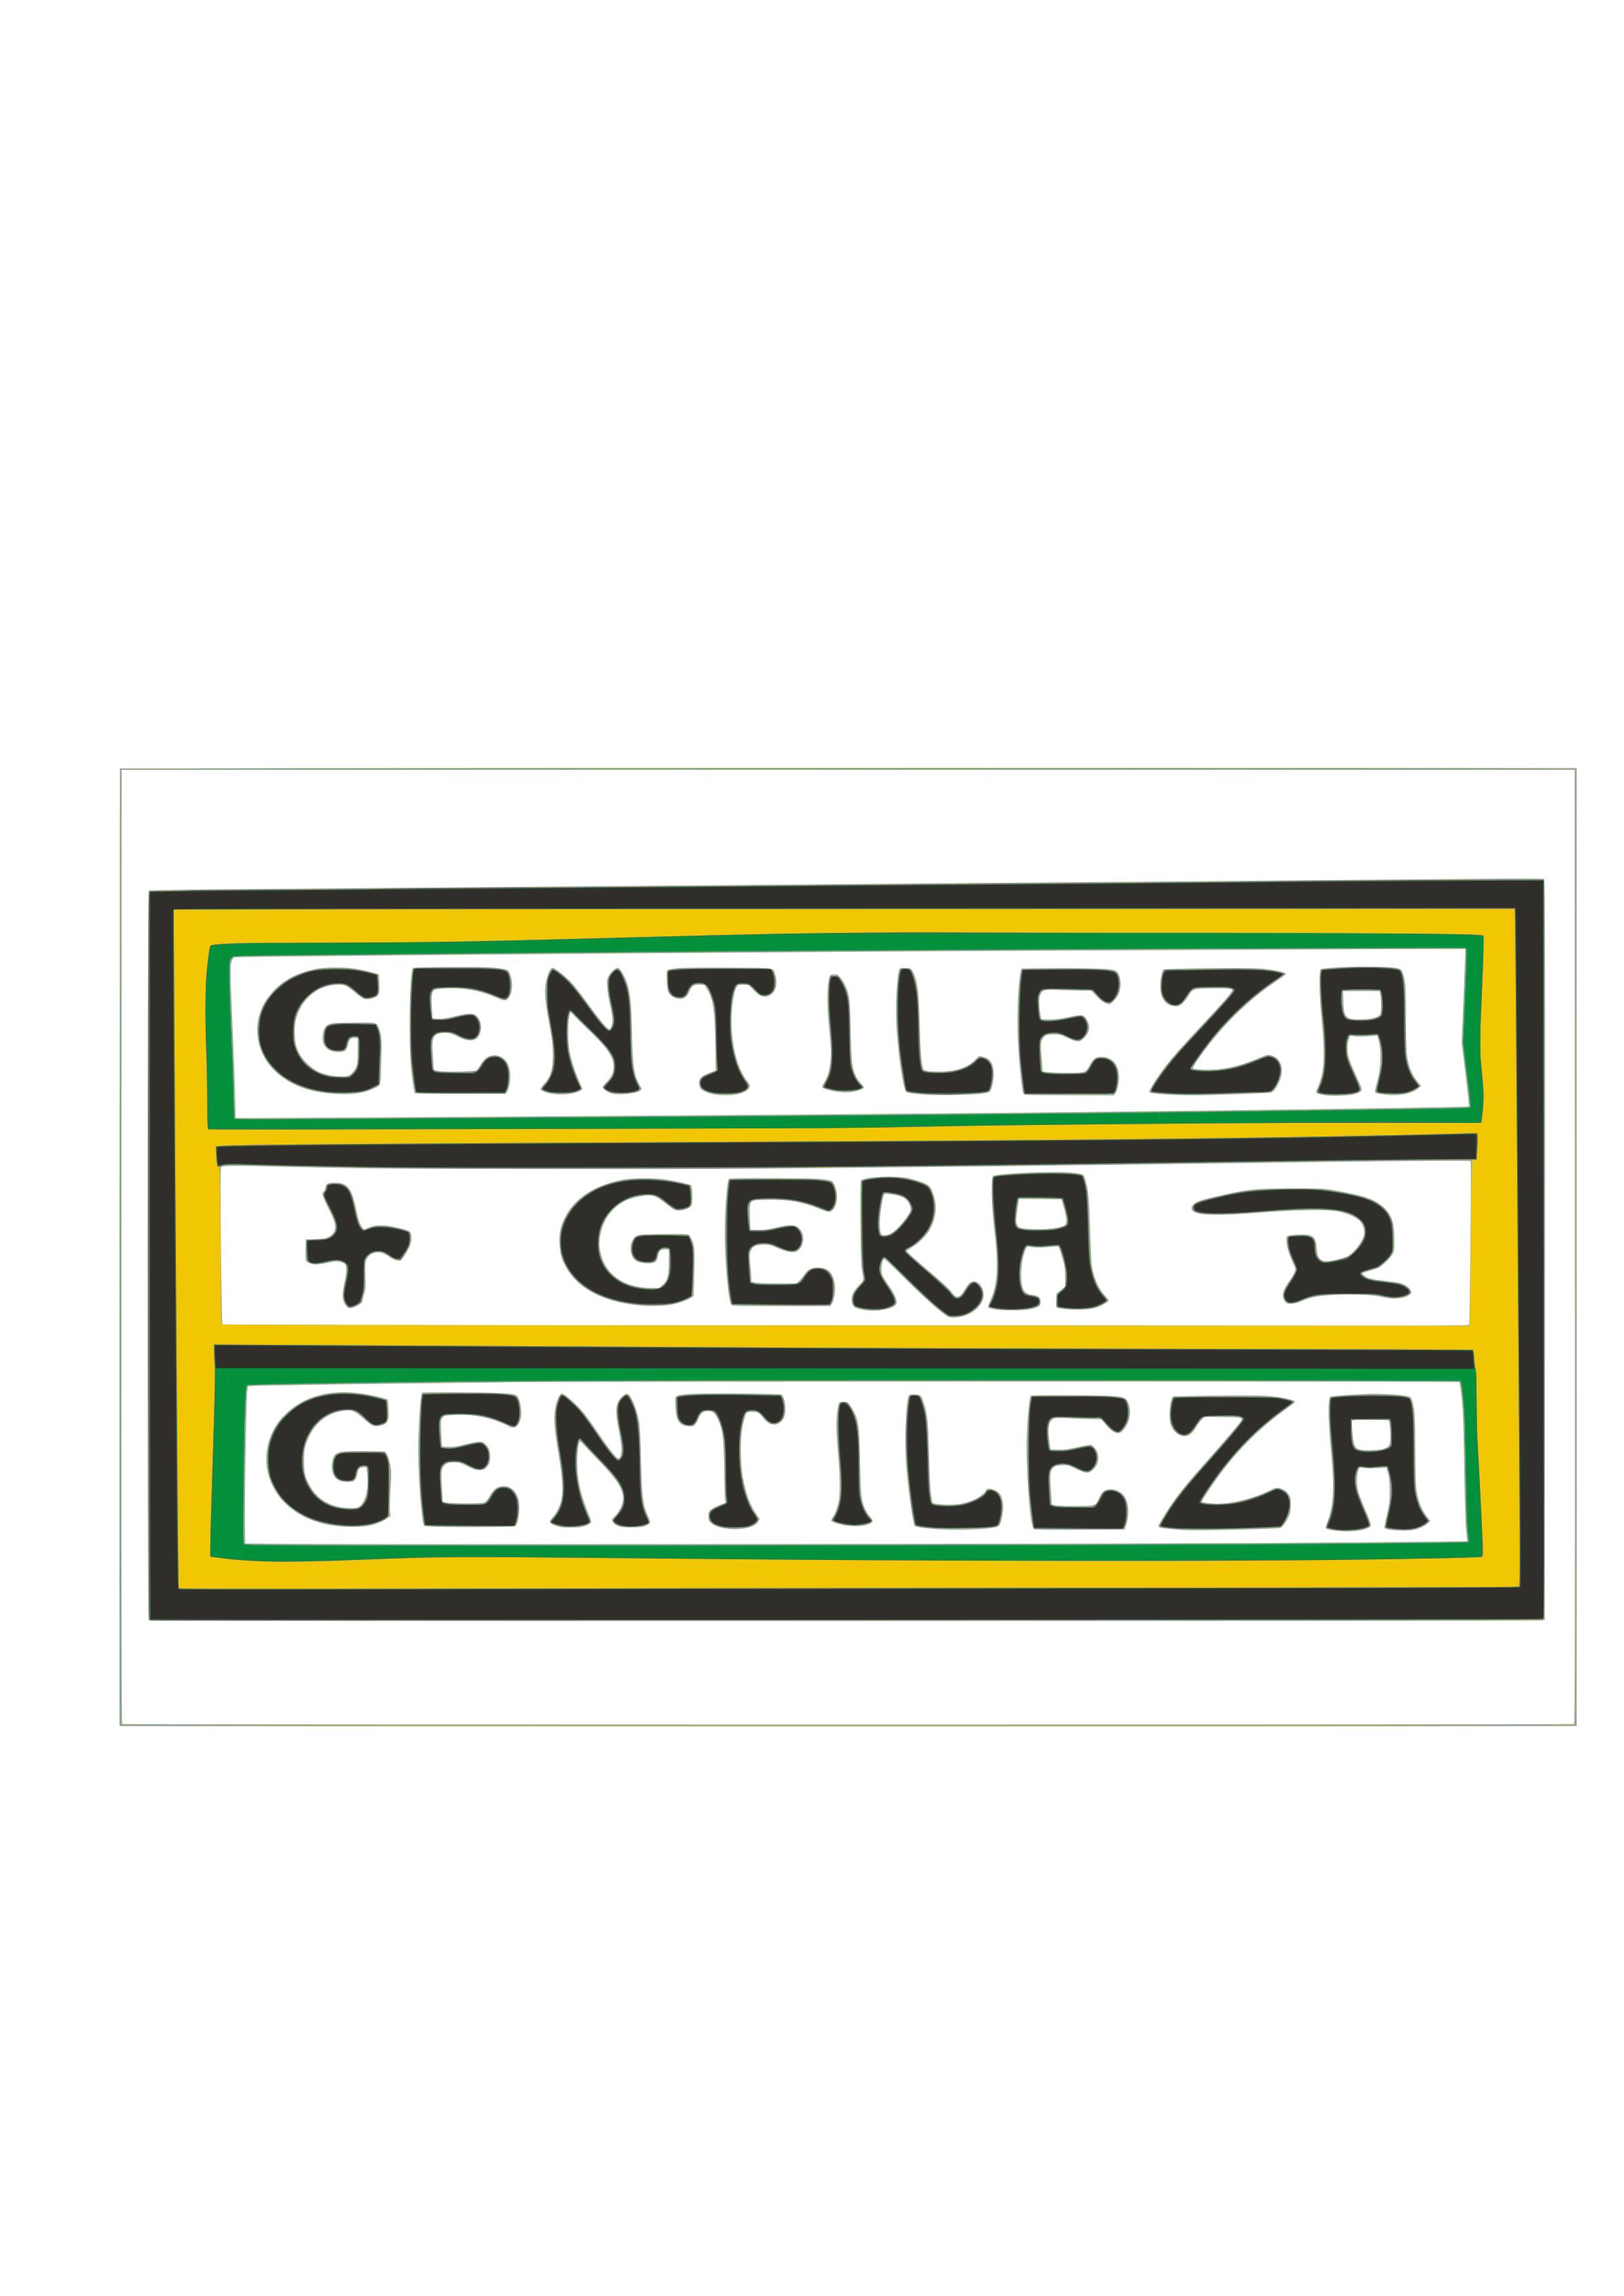 Gentileza-wall writing-02 png